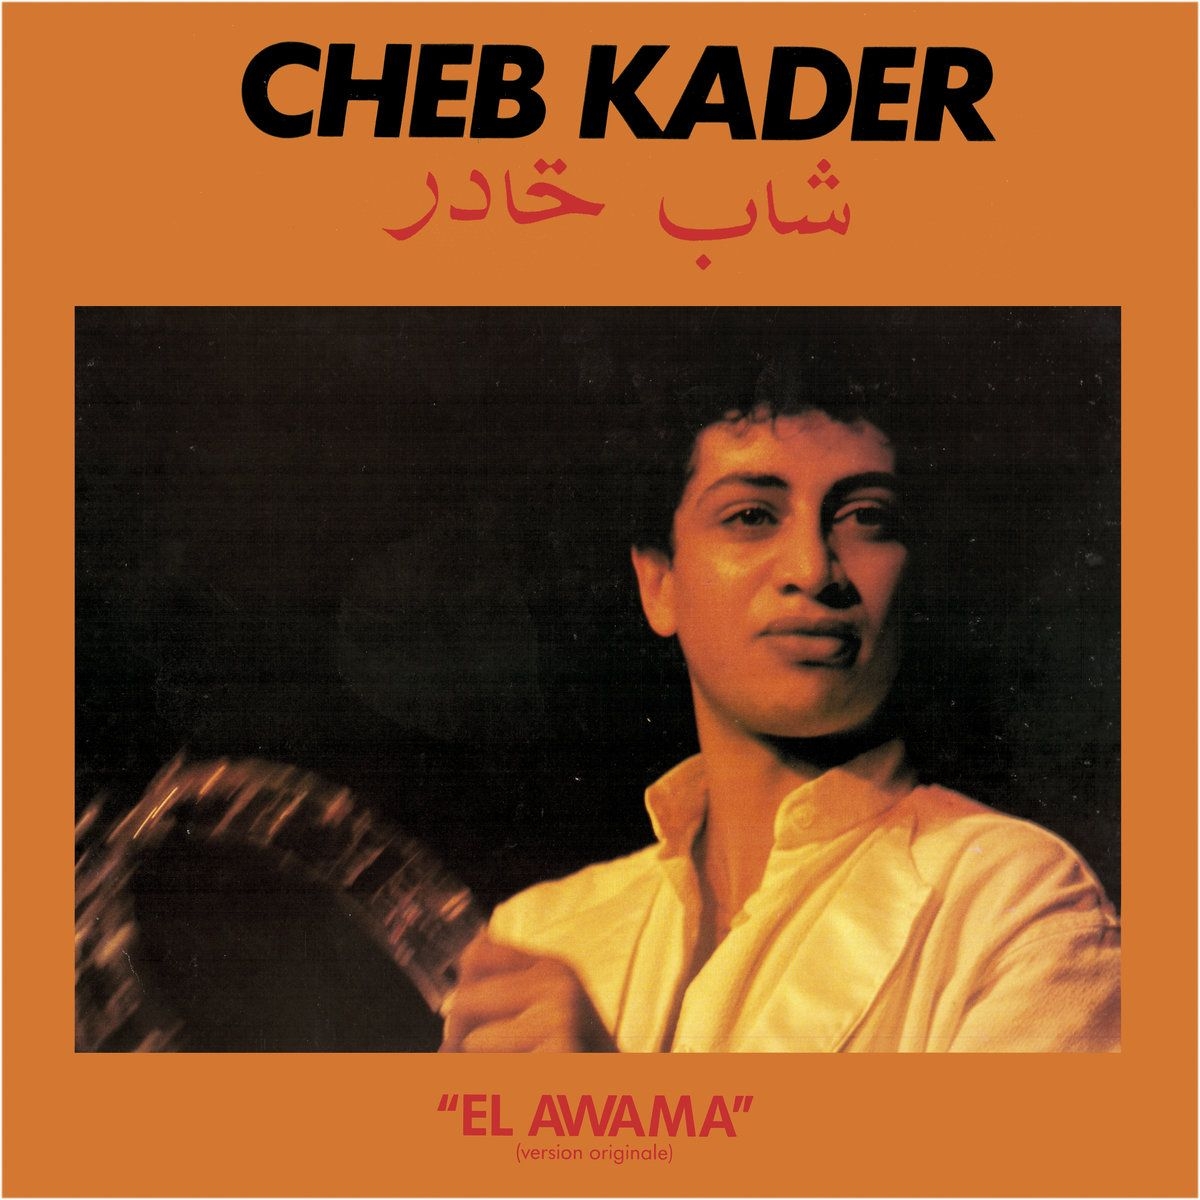 Album vinyle Cheb Kader - El Awama de sur Scredboutique.com